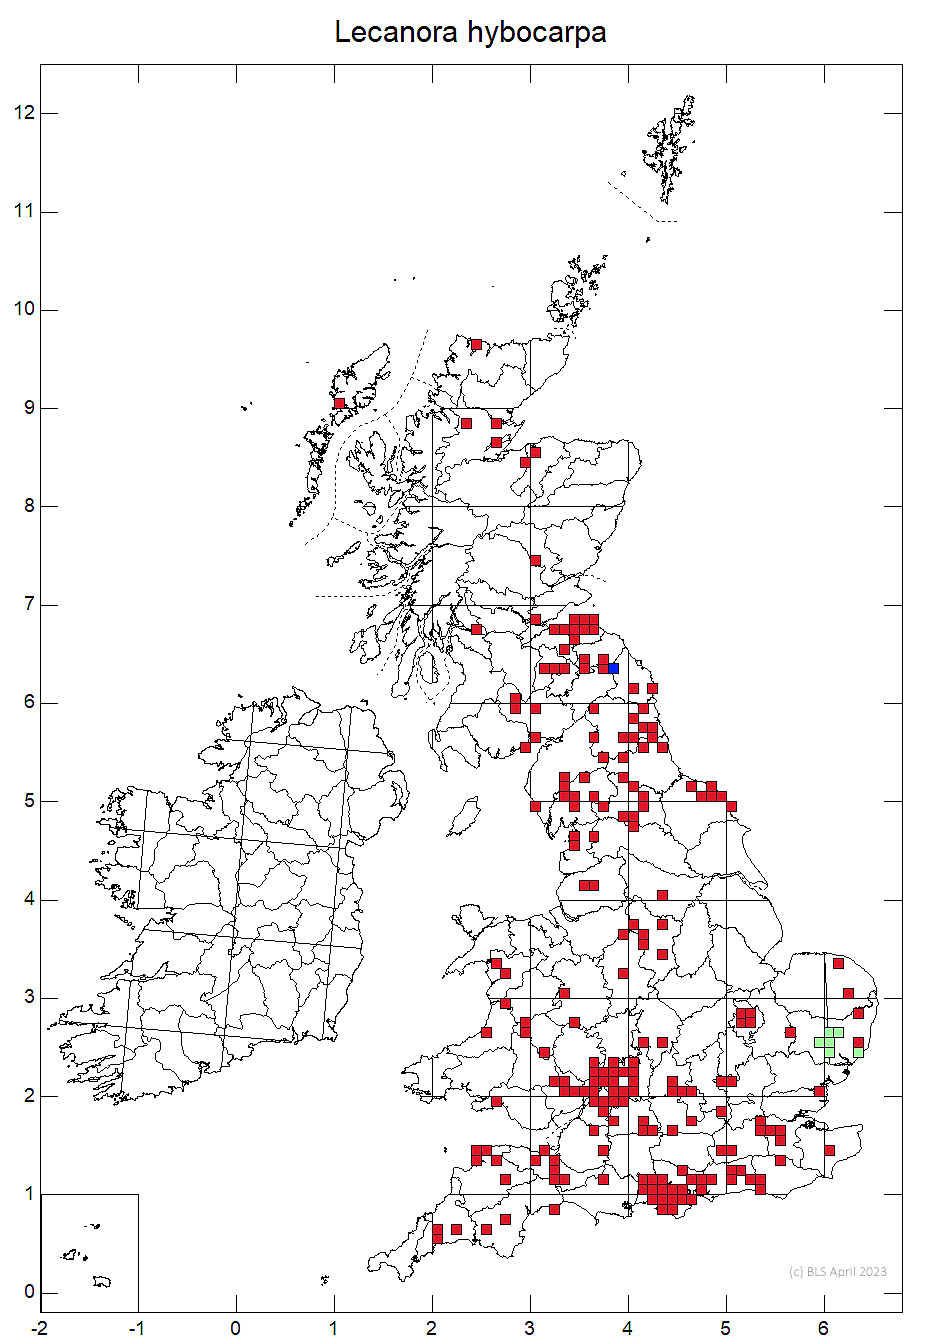 Lecanora hybocarpa 10km sq distribution map